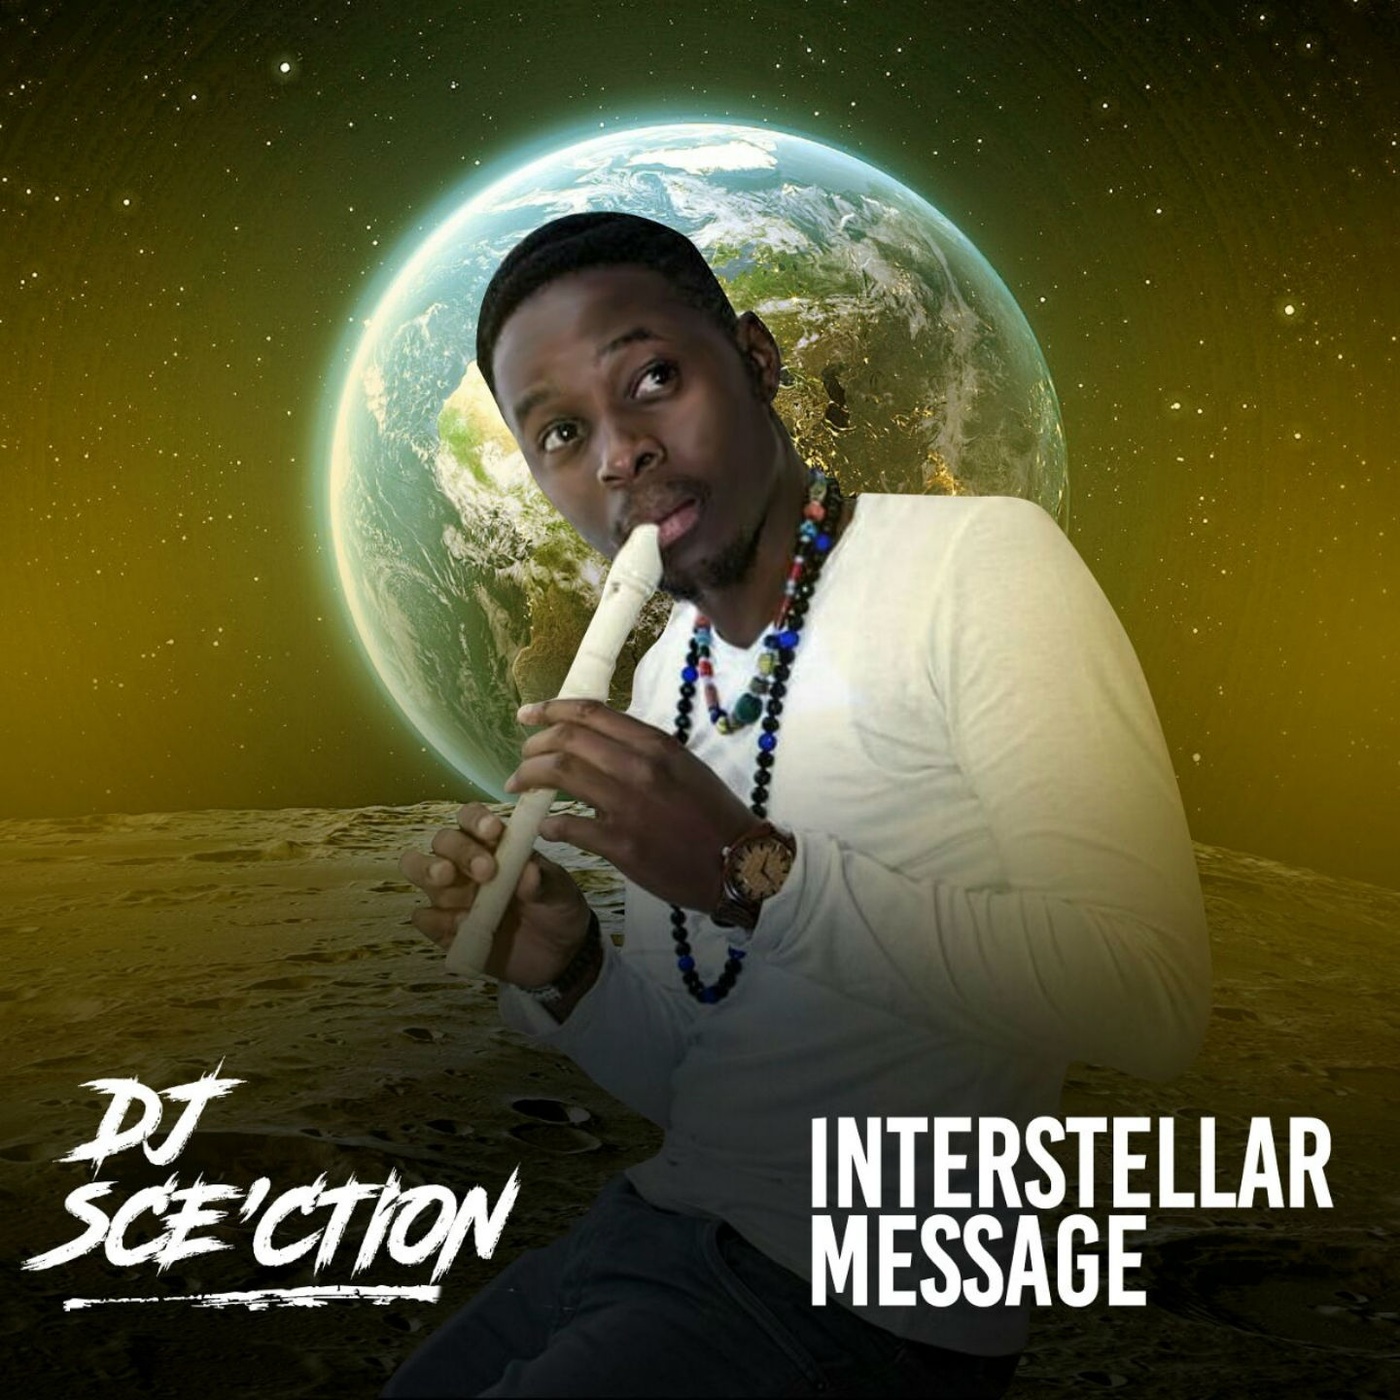 Dj Sce'ction - Interstellar Message / BlackVision Music